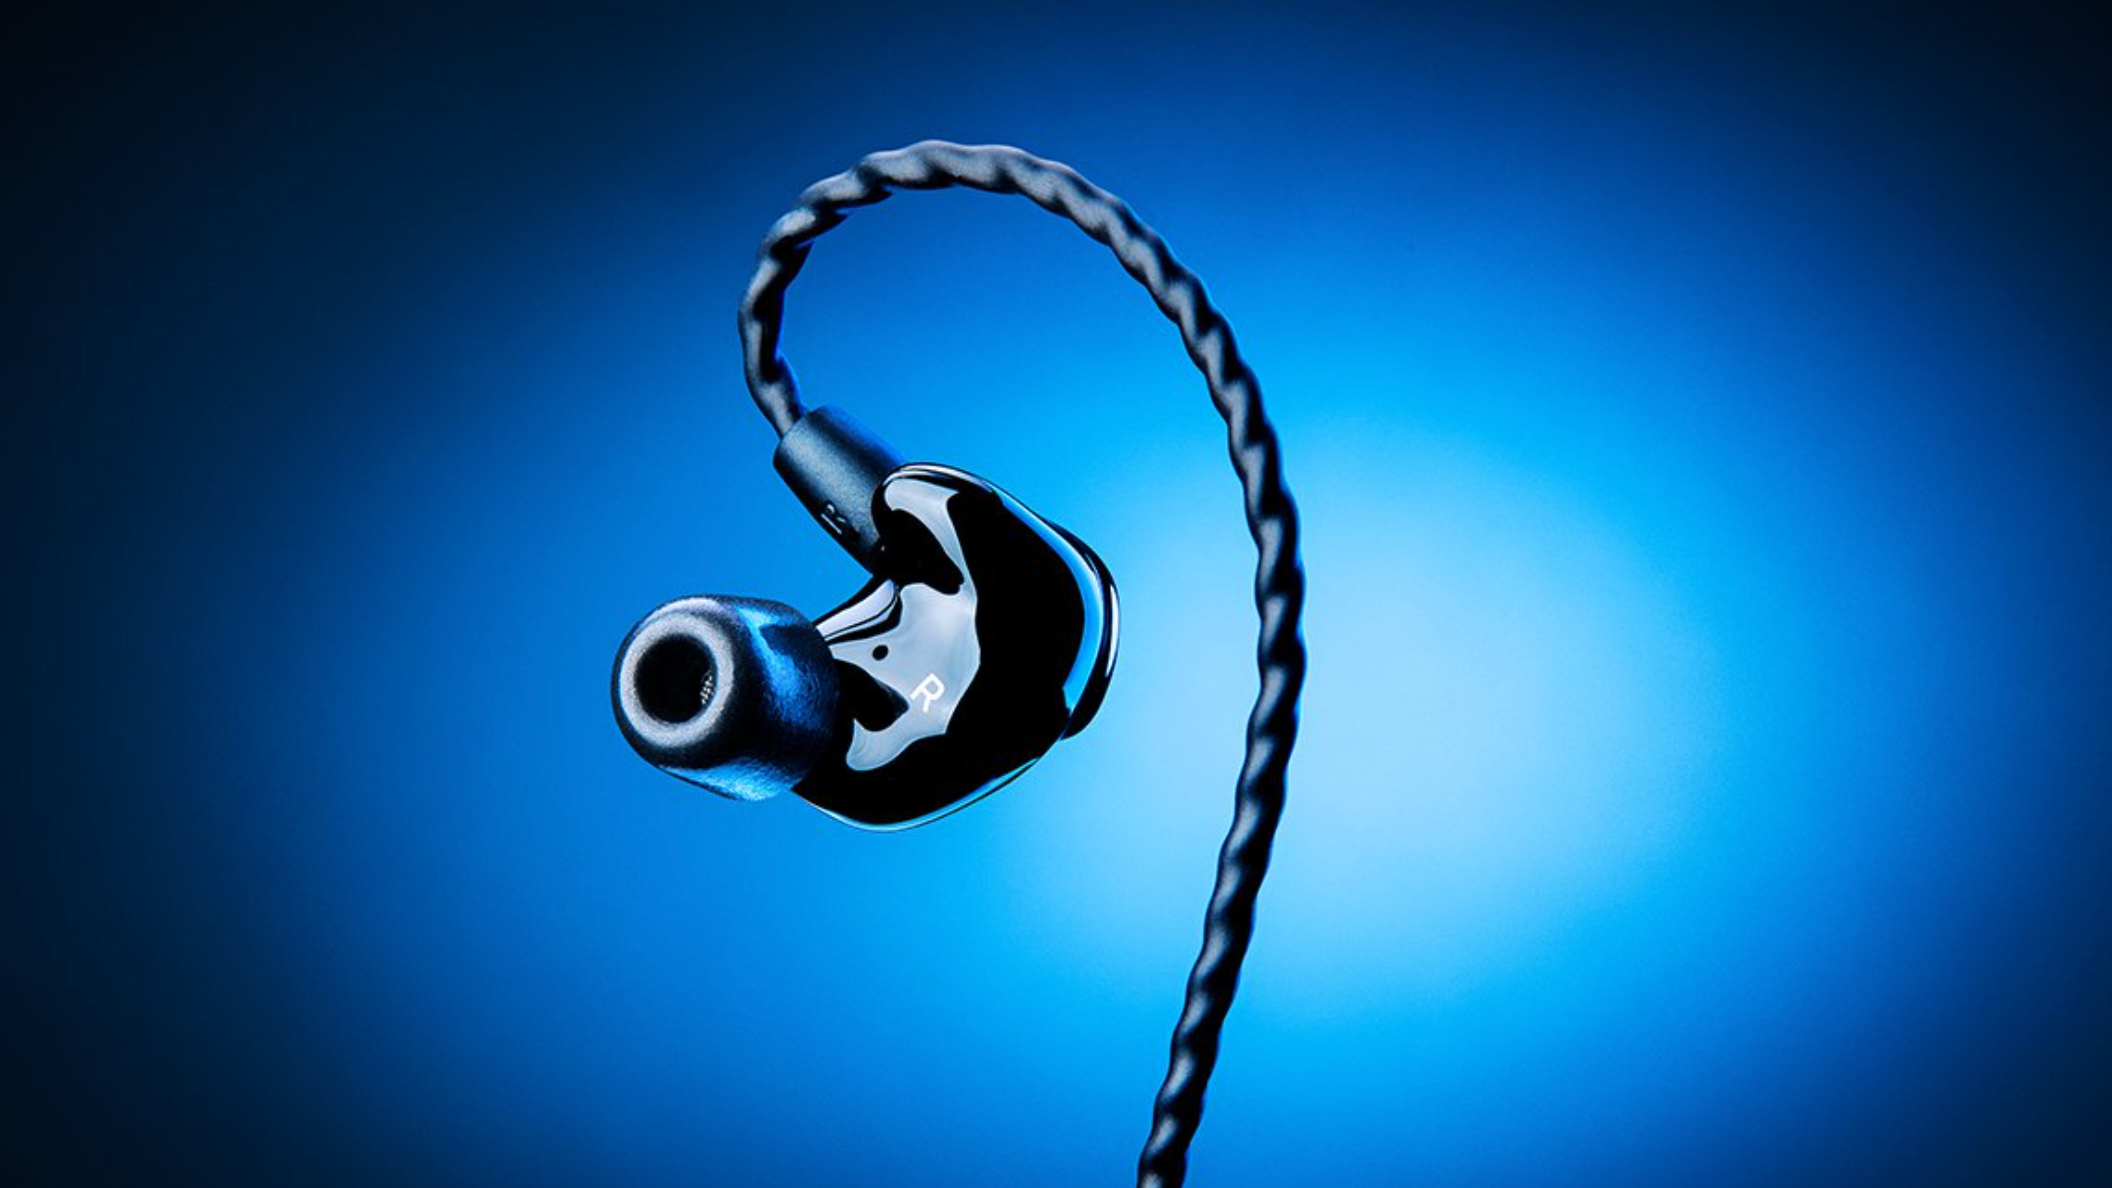 Razer Moray earbud showing the earpiece in detail, on blue background